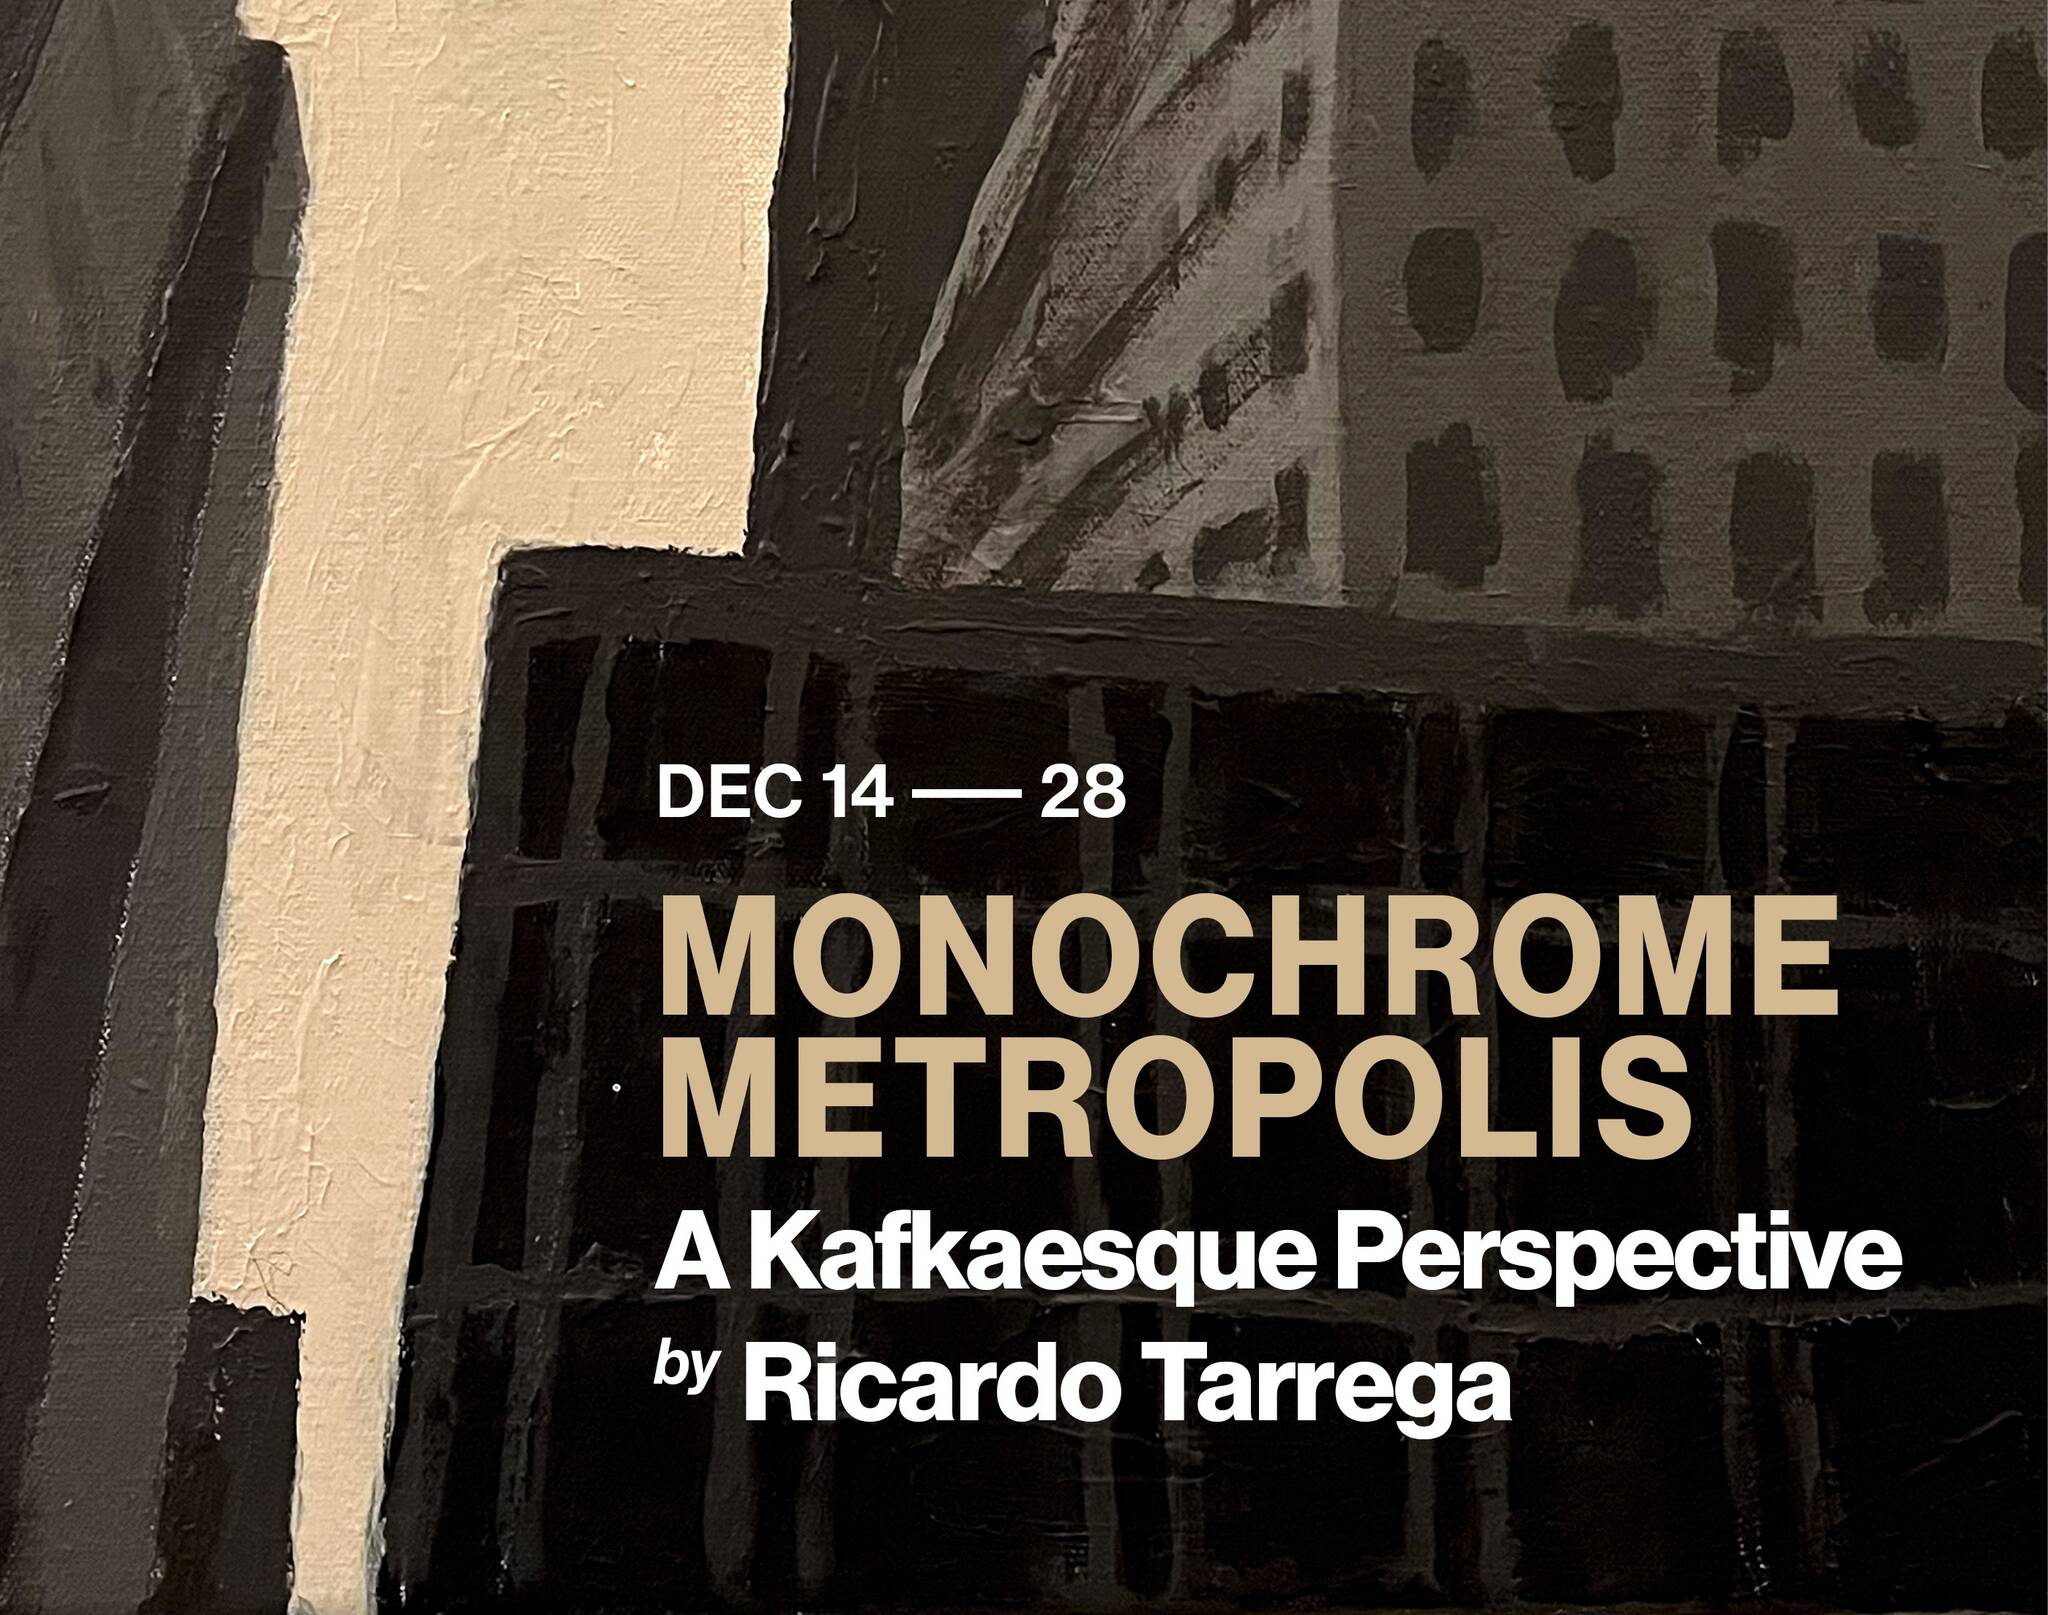 Monochrome Metropolis: A Kafkaesque Perspective